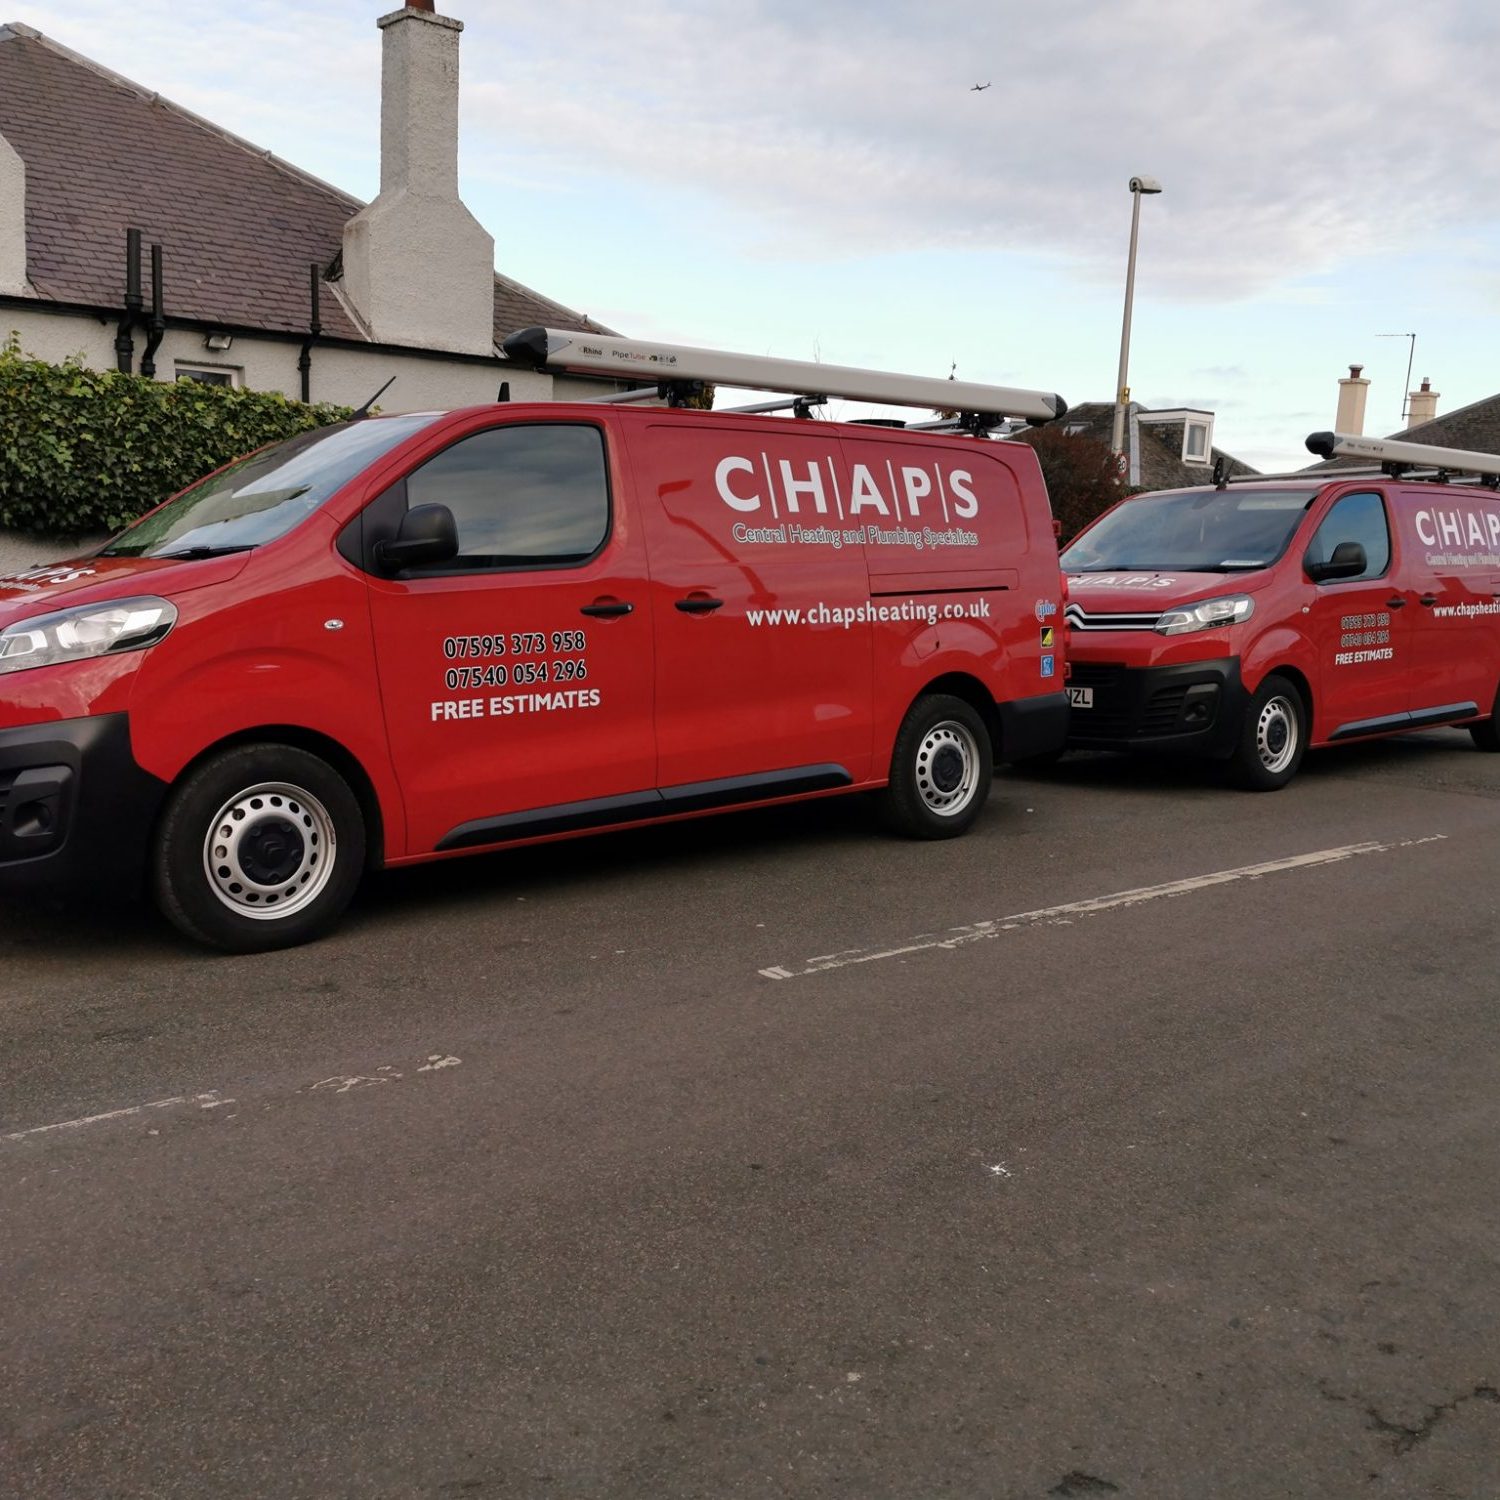 Chaps Plumbing & Heating in Edinburgh